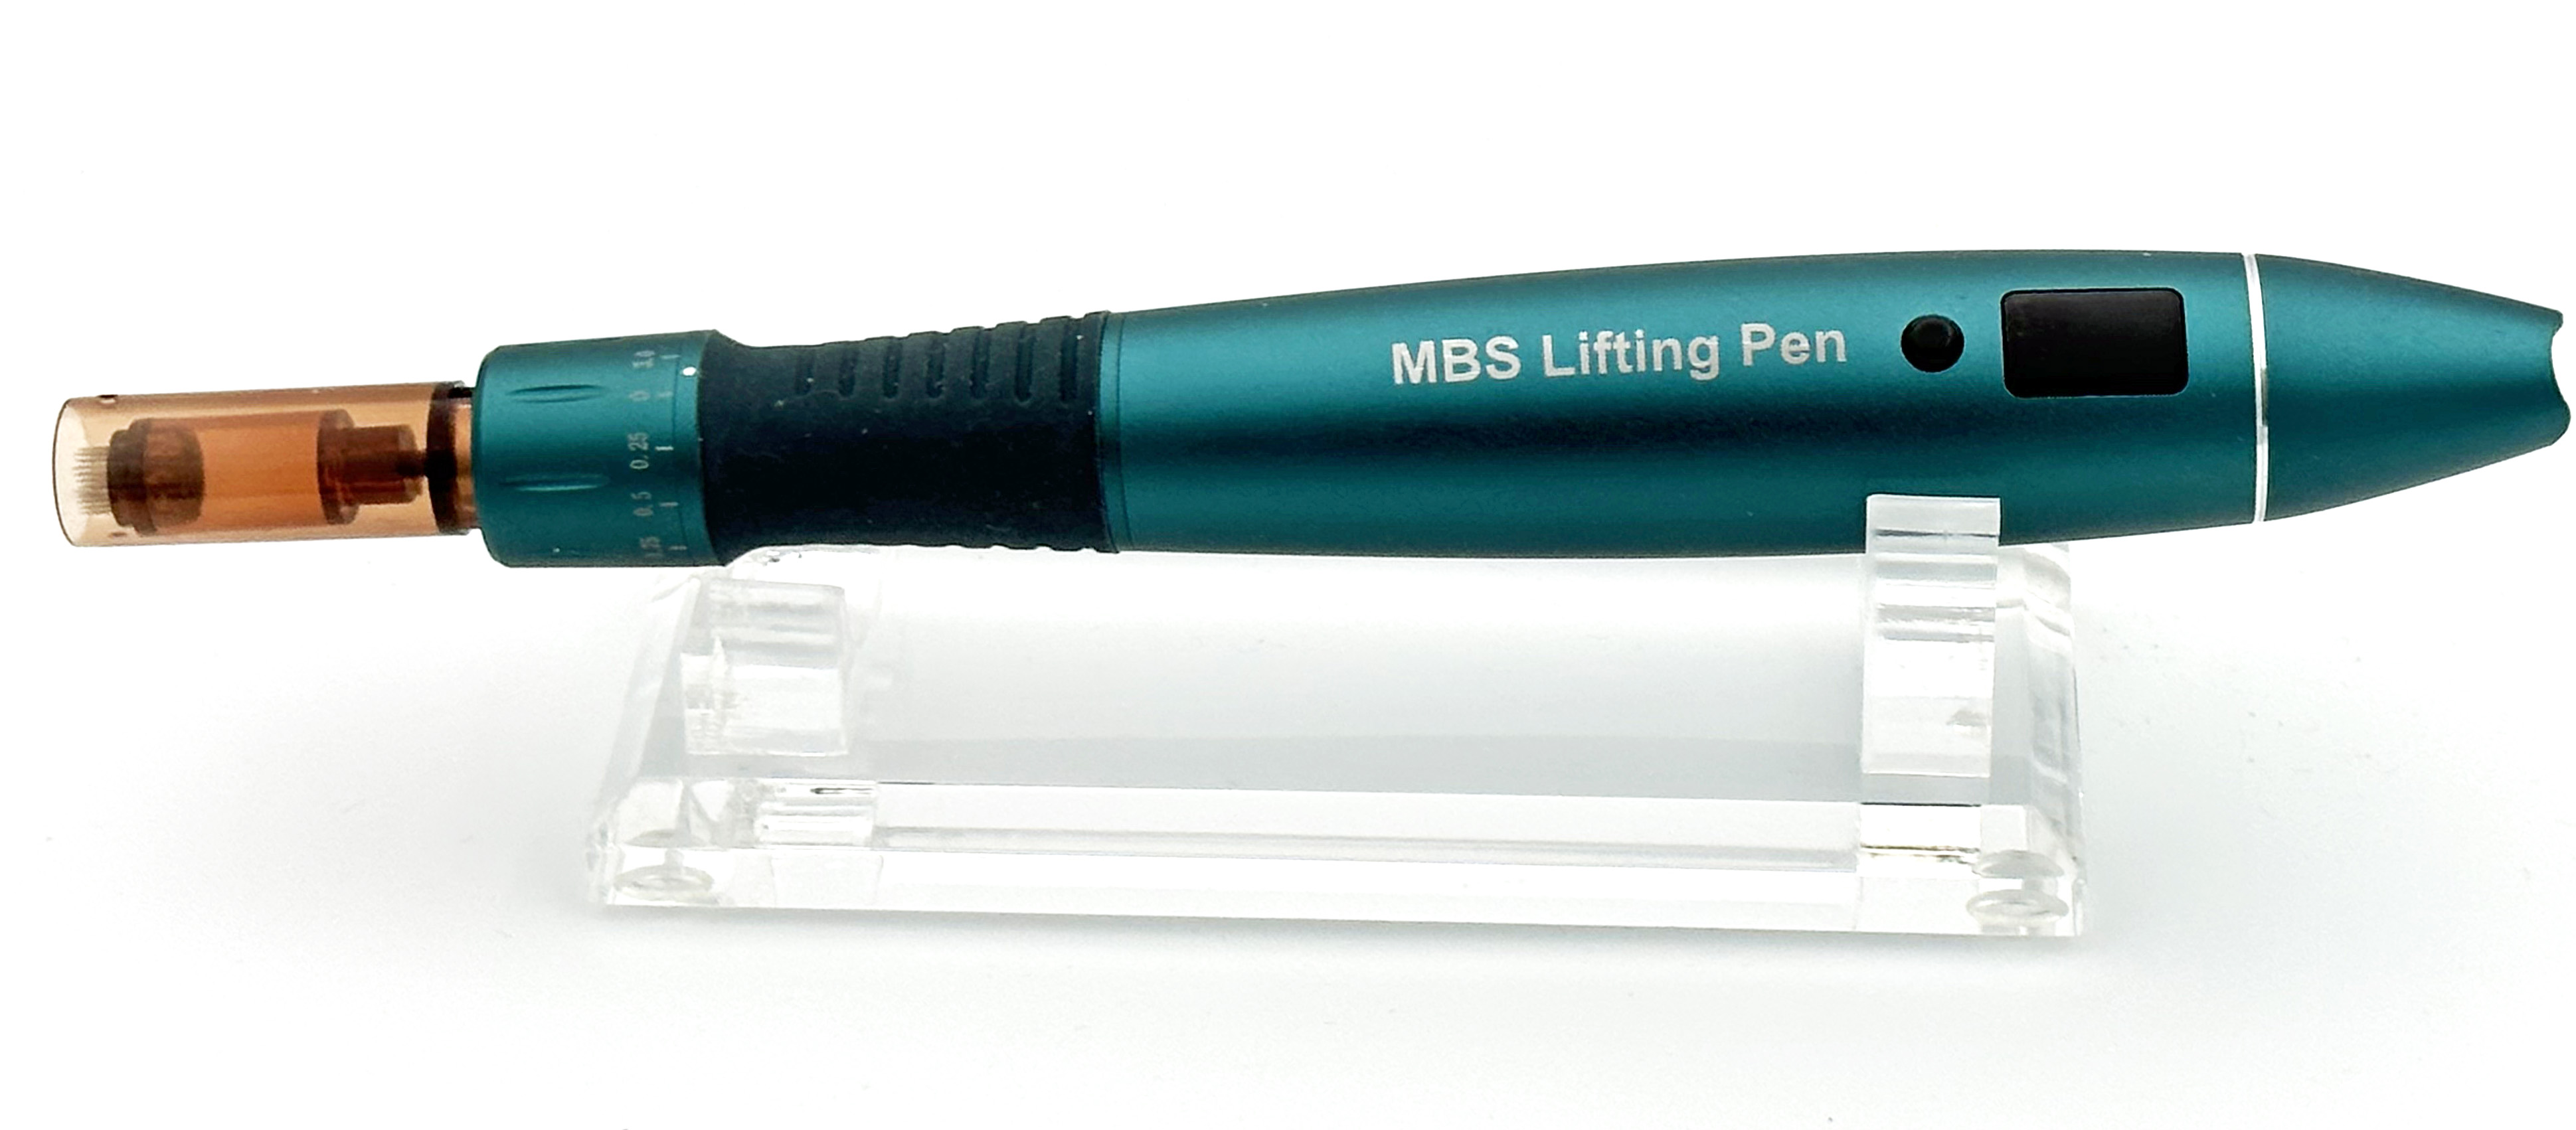 MBS Lifting Pen prof.Starter-Set